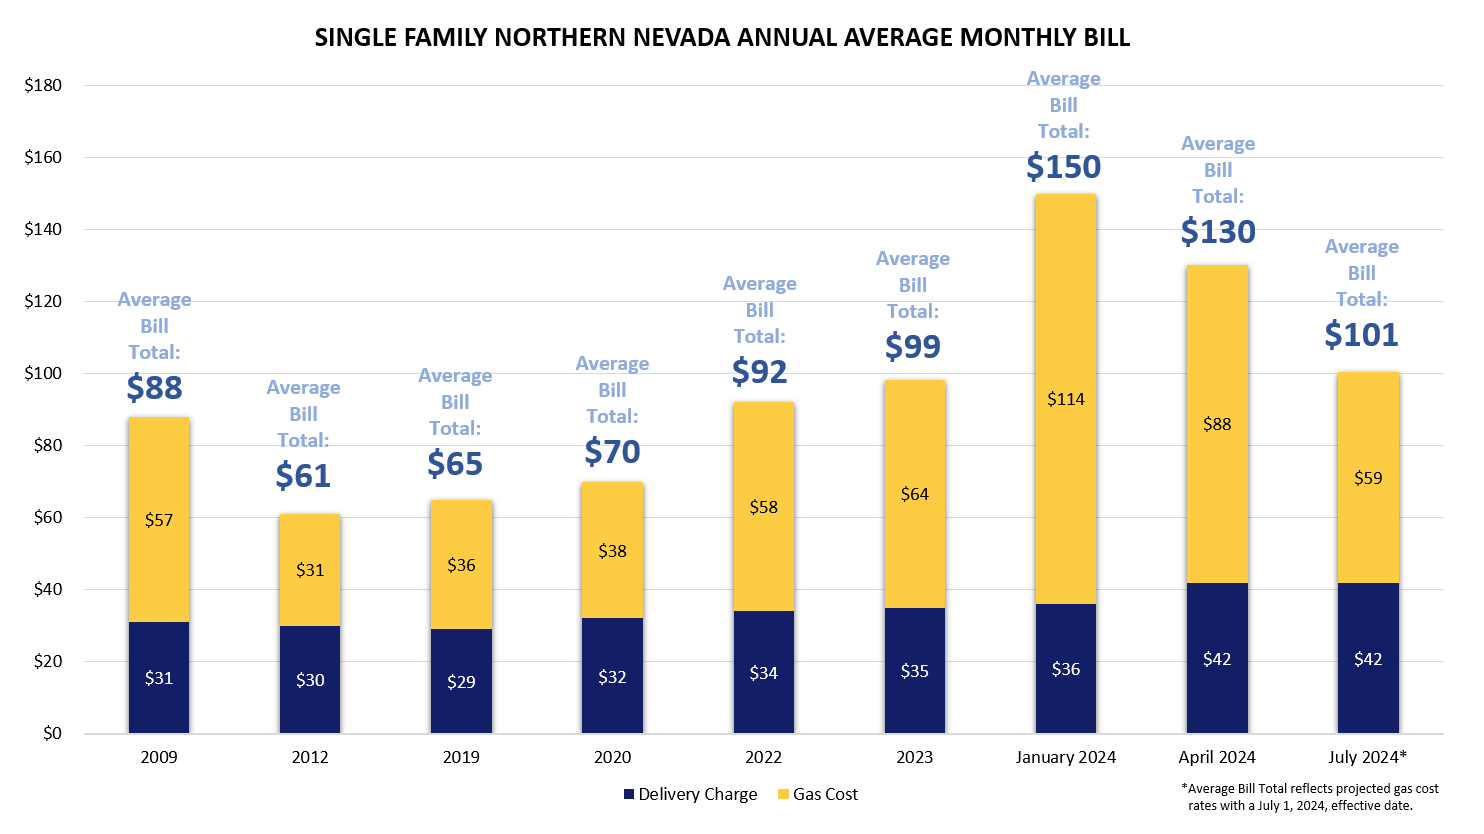 Average Bill NNV Image